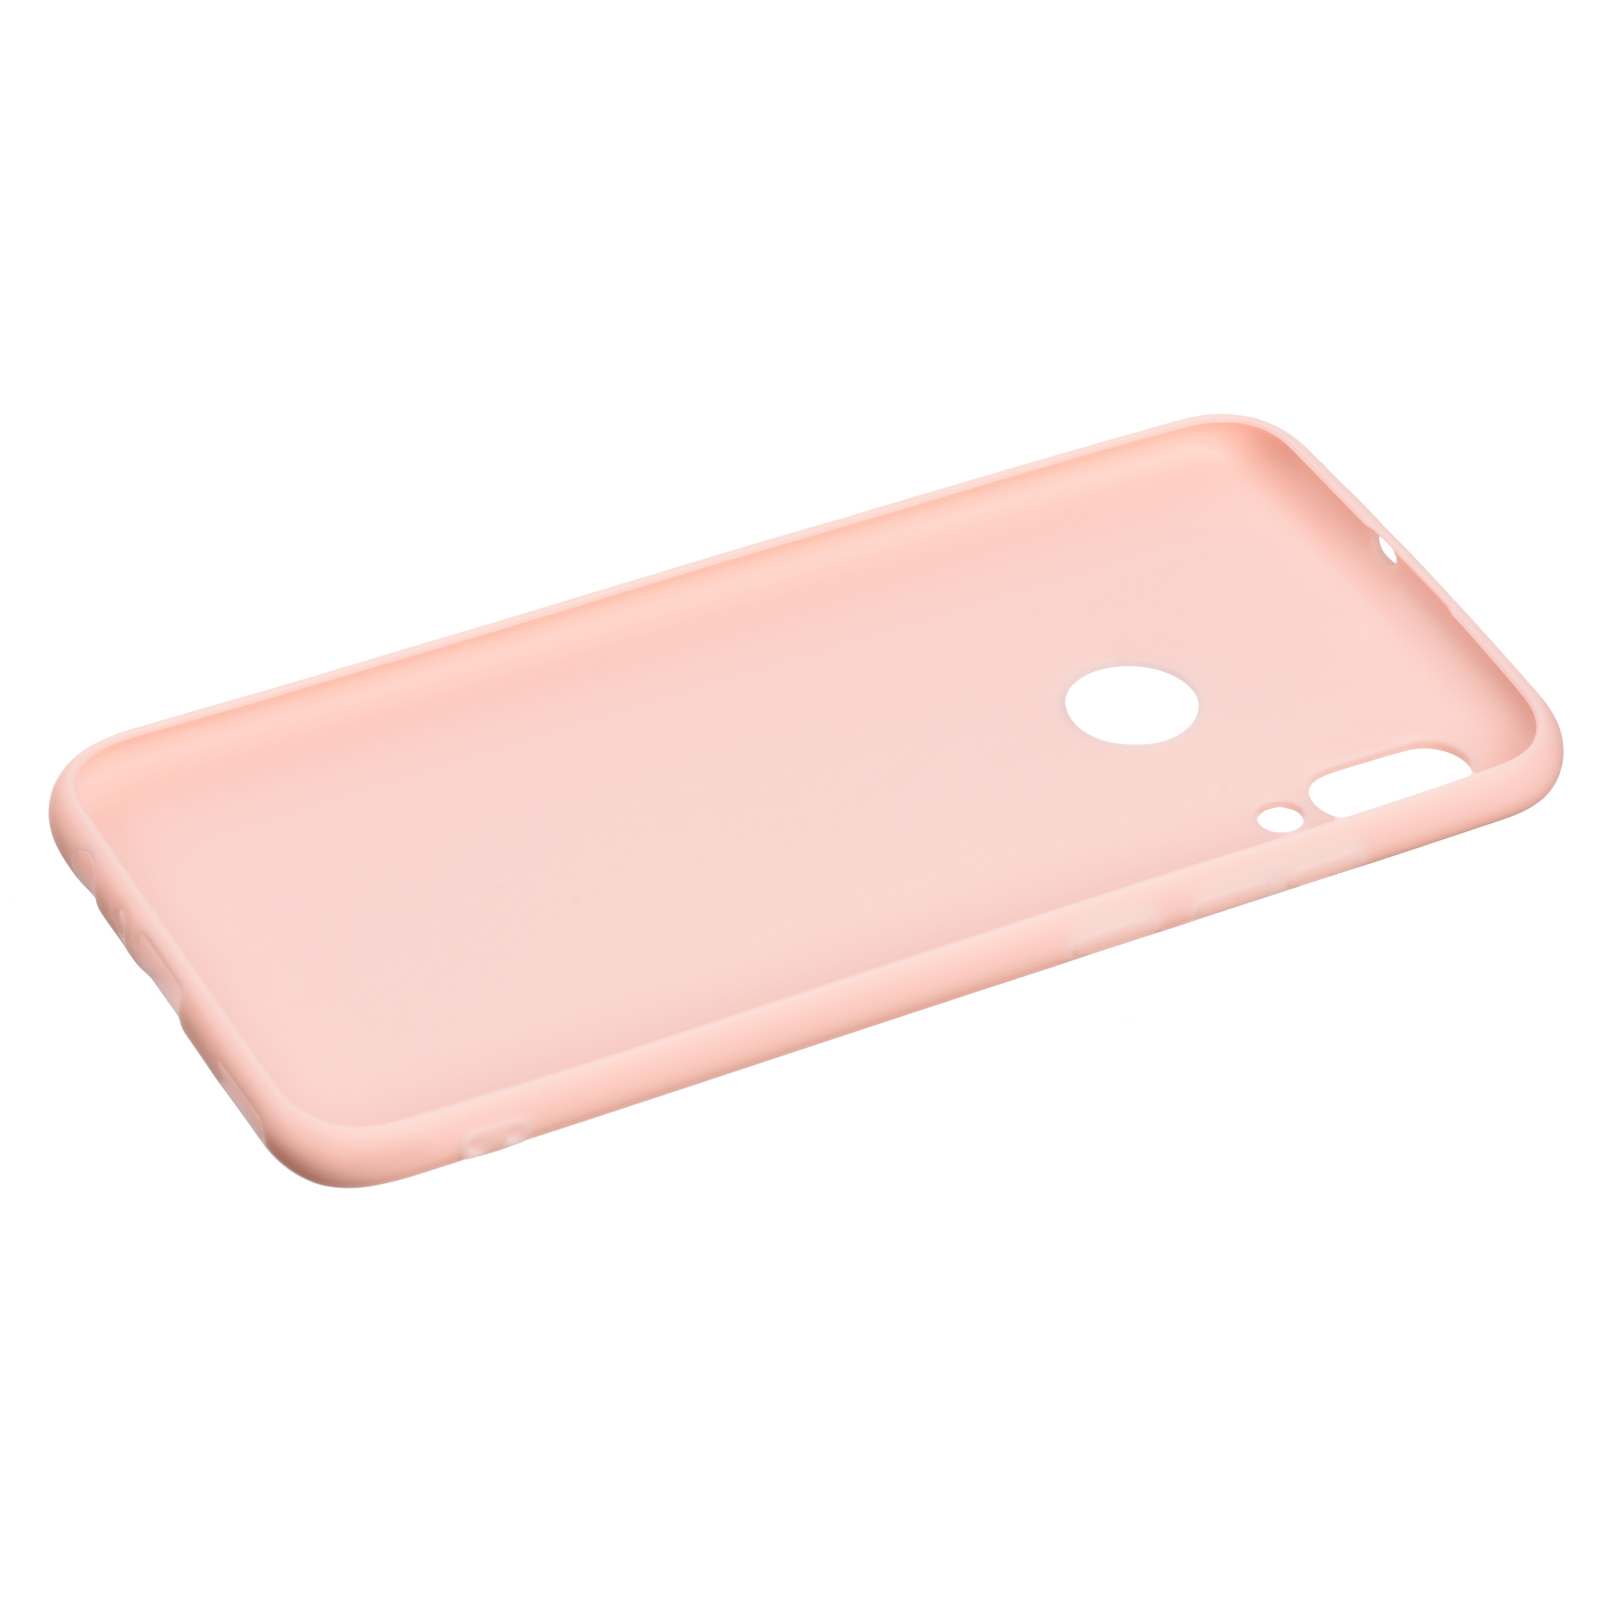 Чехол для мобильного телефона 2E Huawei P Smart 2019, Soft touch, Baby pink (2E-H-PS-19-AOST-BP) изображение 2